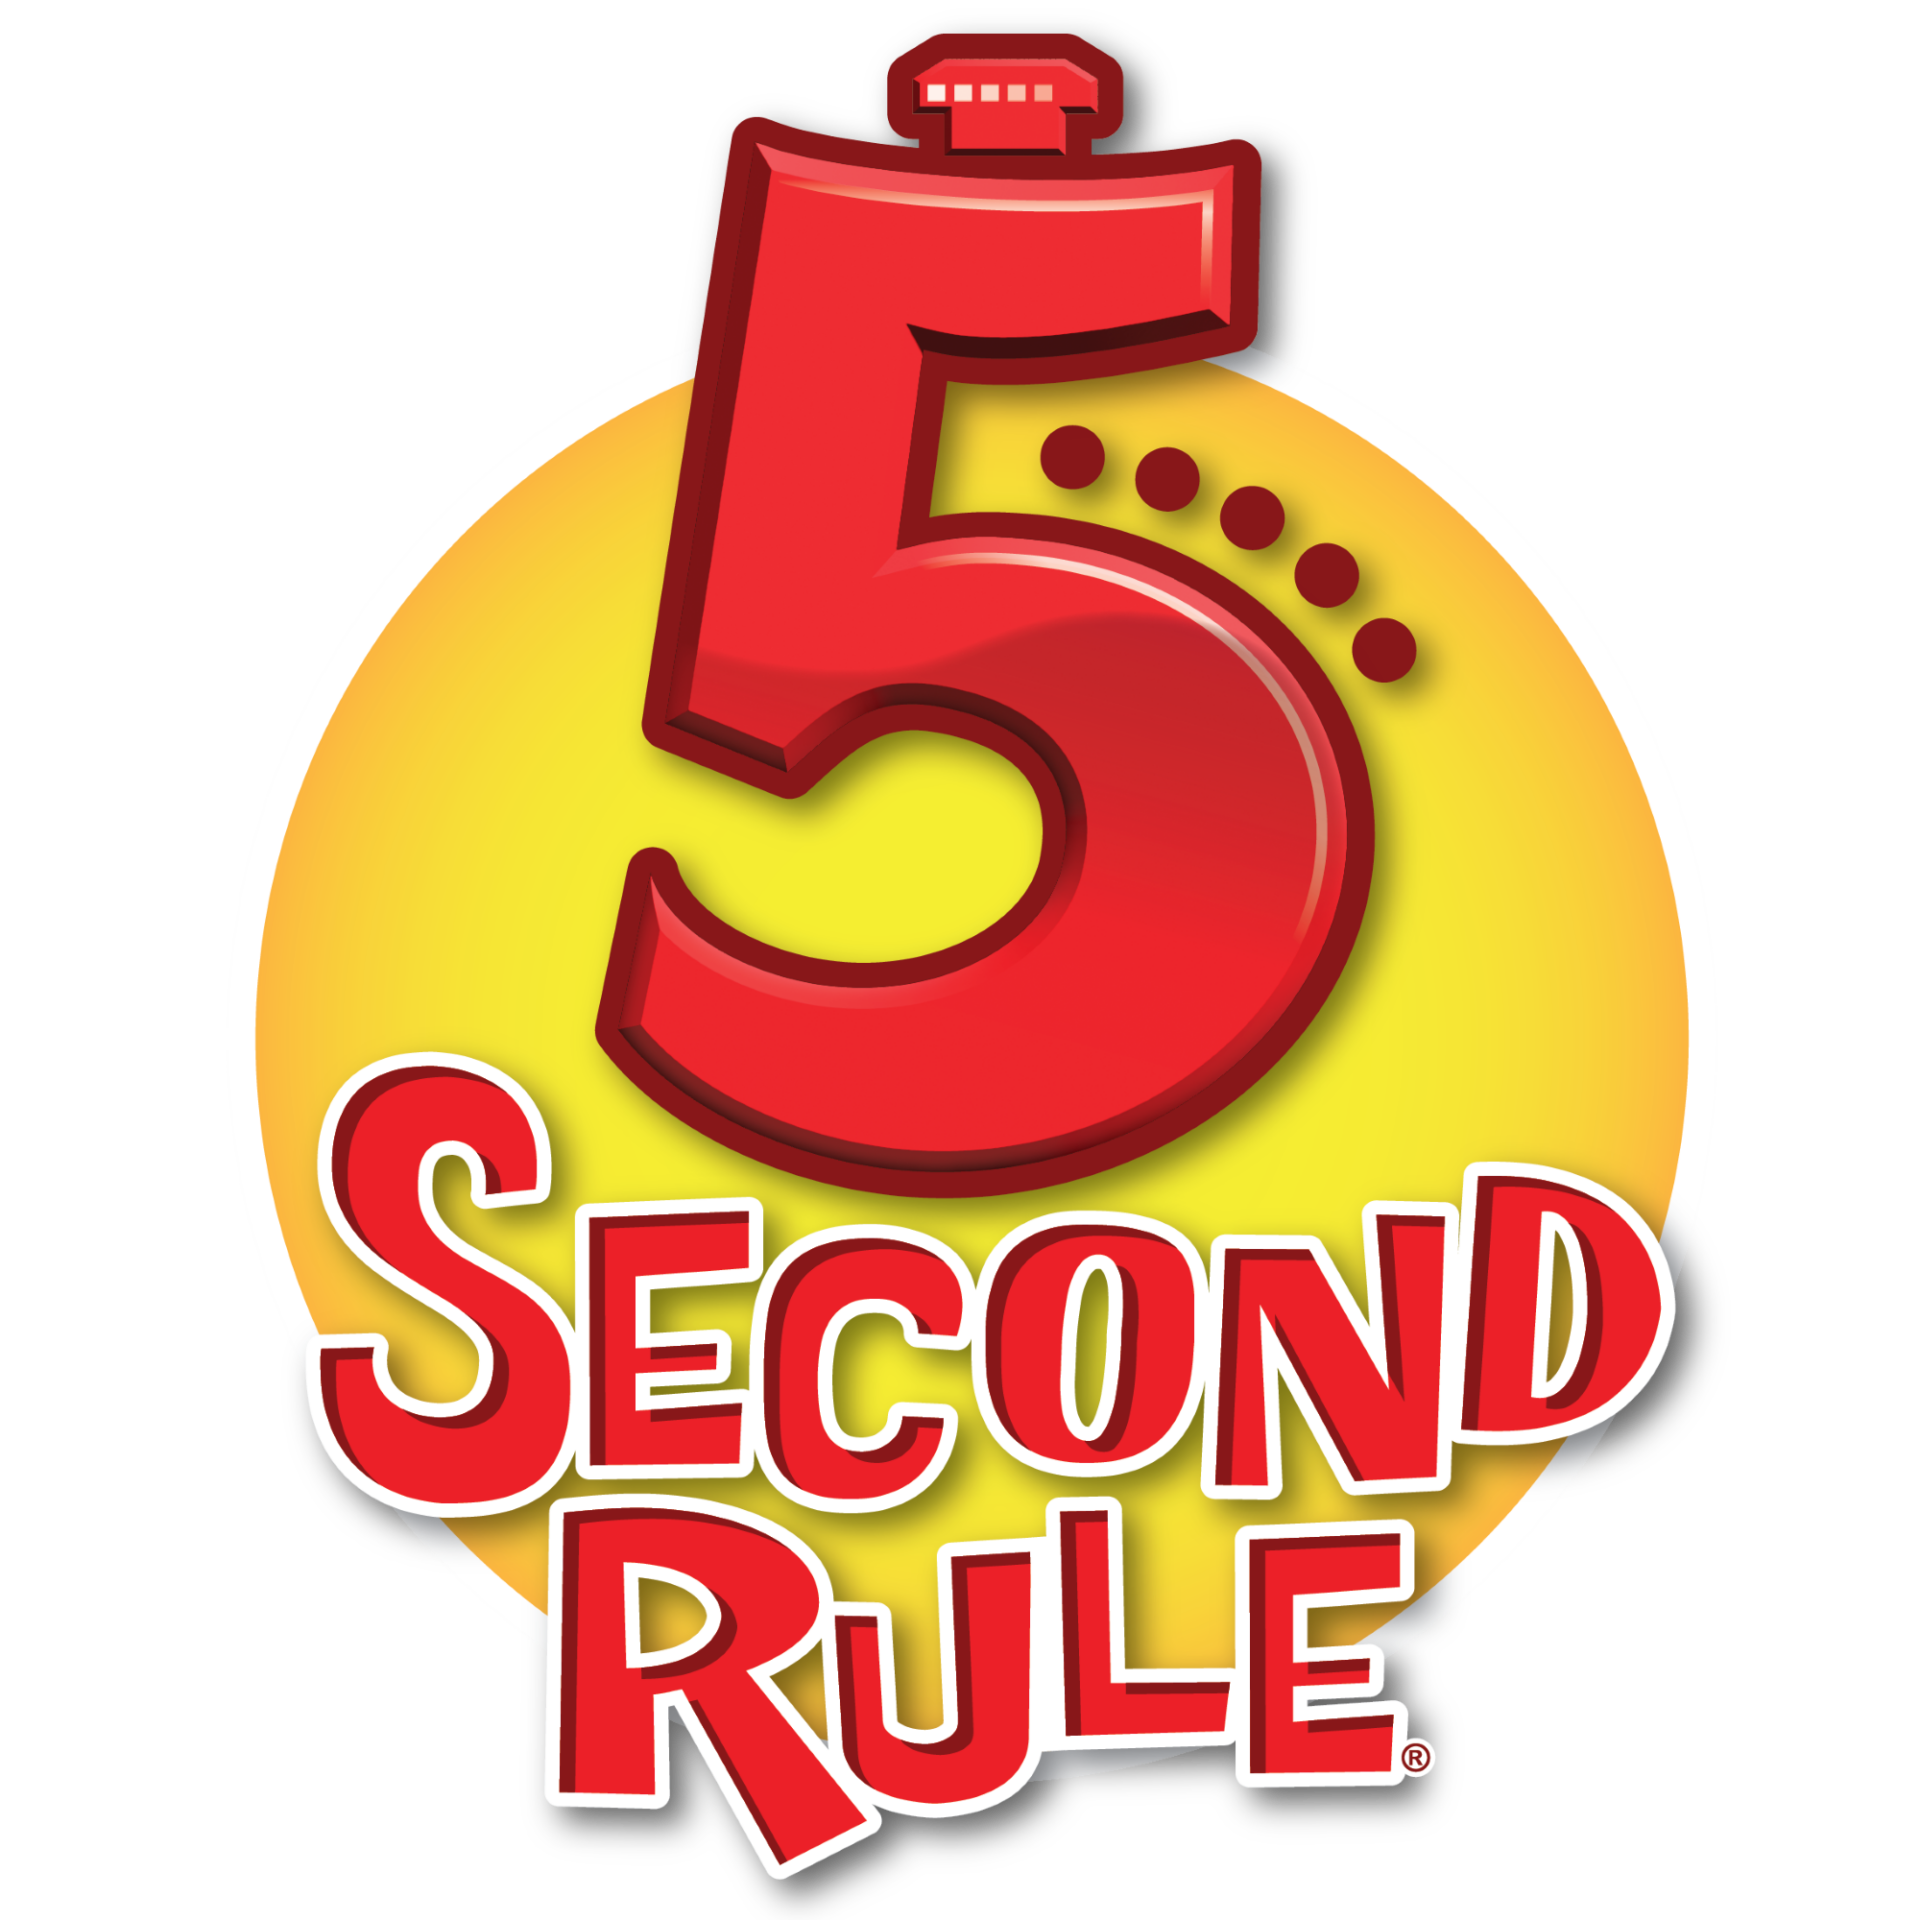 5 Second Rule logo